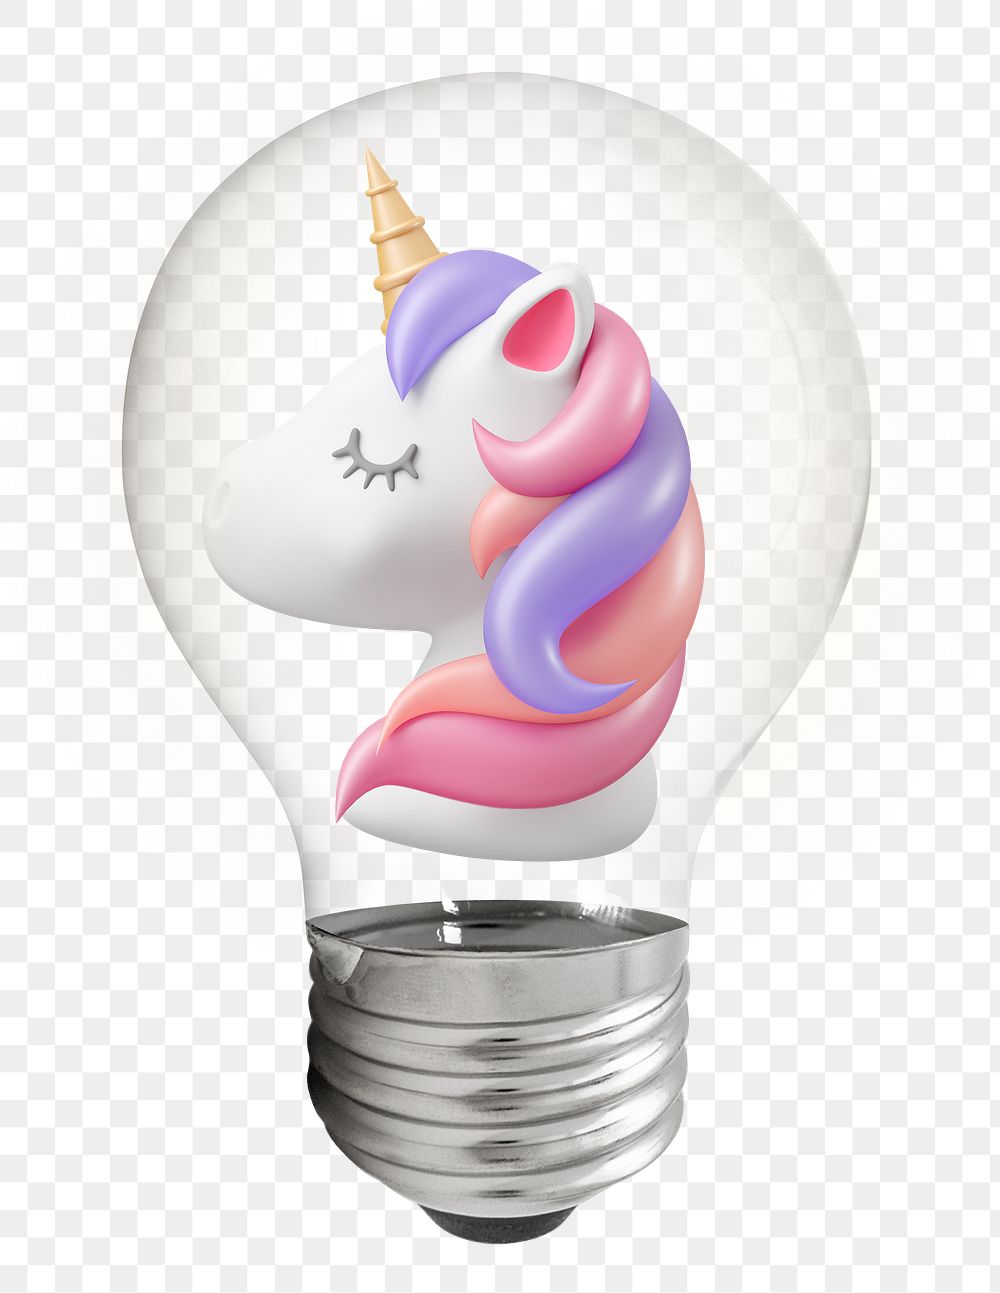 3D unicorn png sticker, startup business symbol in light bulb on transparent background